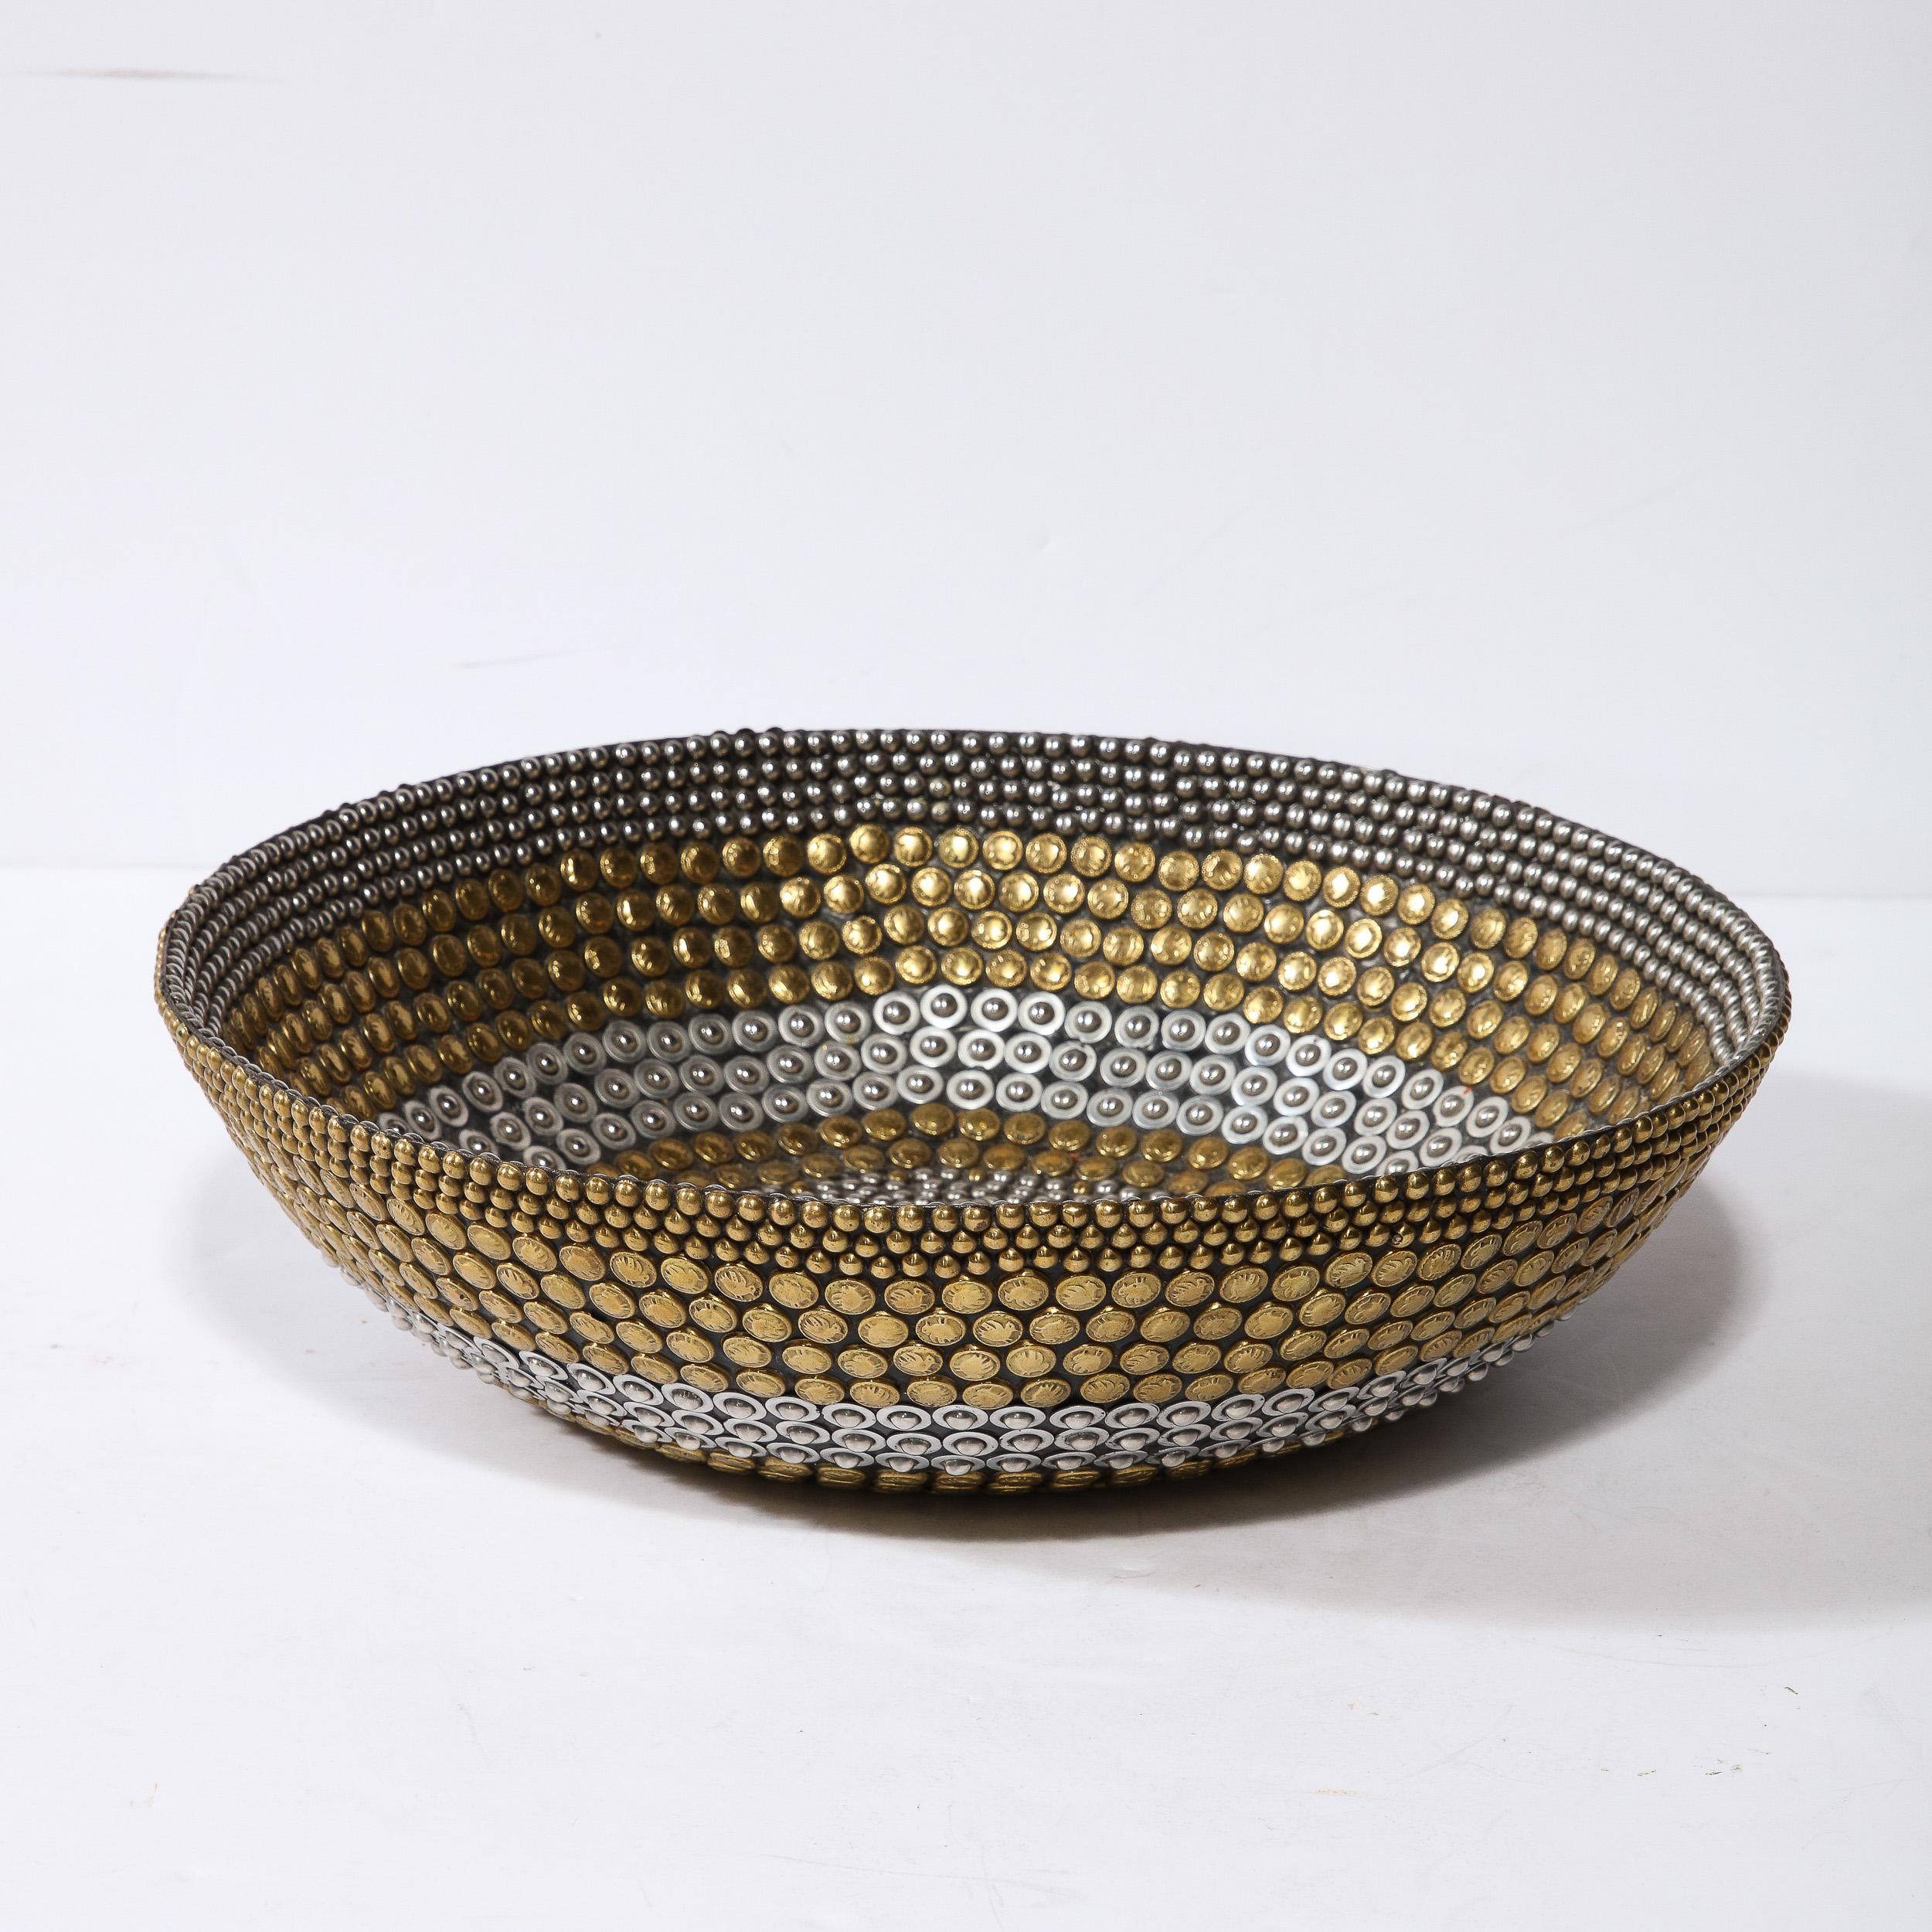 Modernist Centerpiece Bowl in Brass and Nickel Studded Banding by Kim Seybert 1